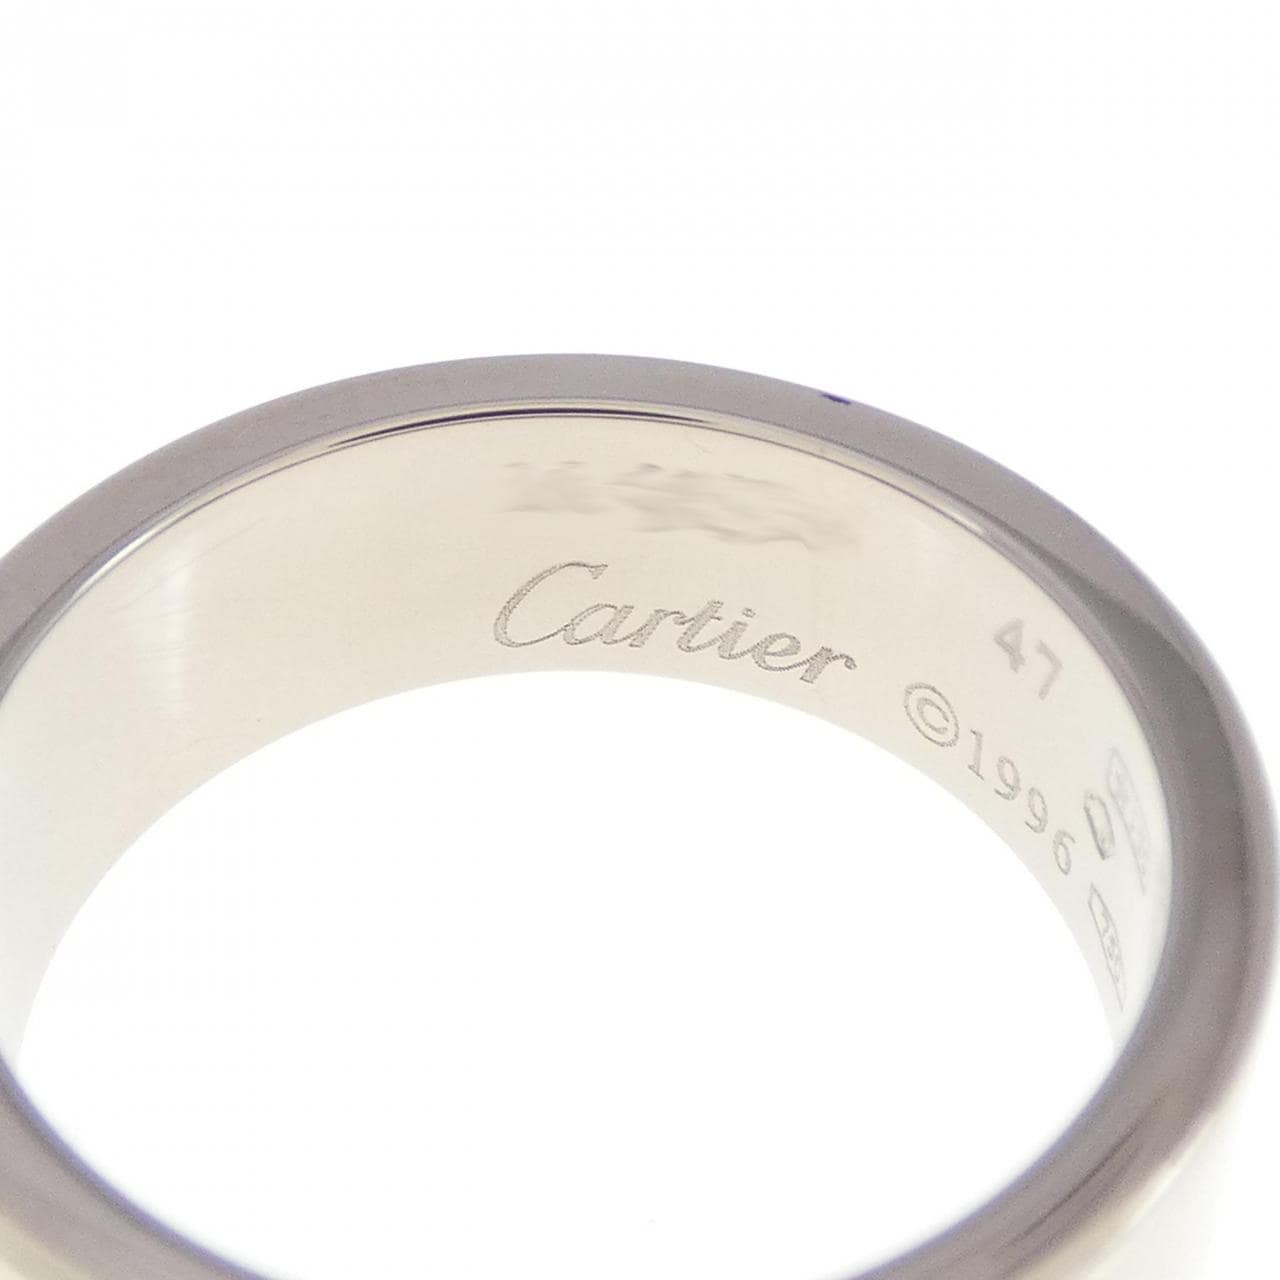 CARTIER LOVE ring